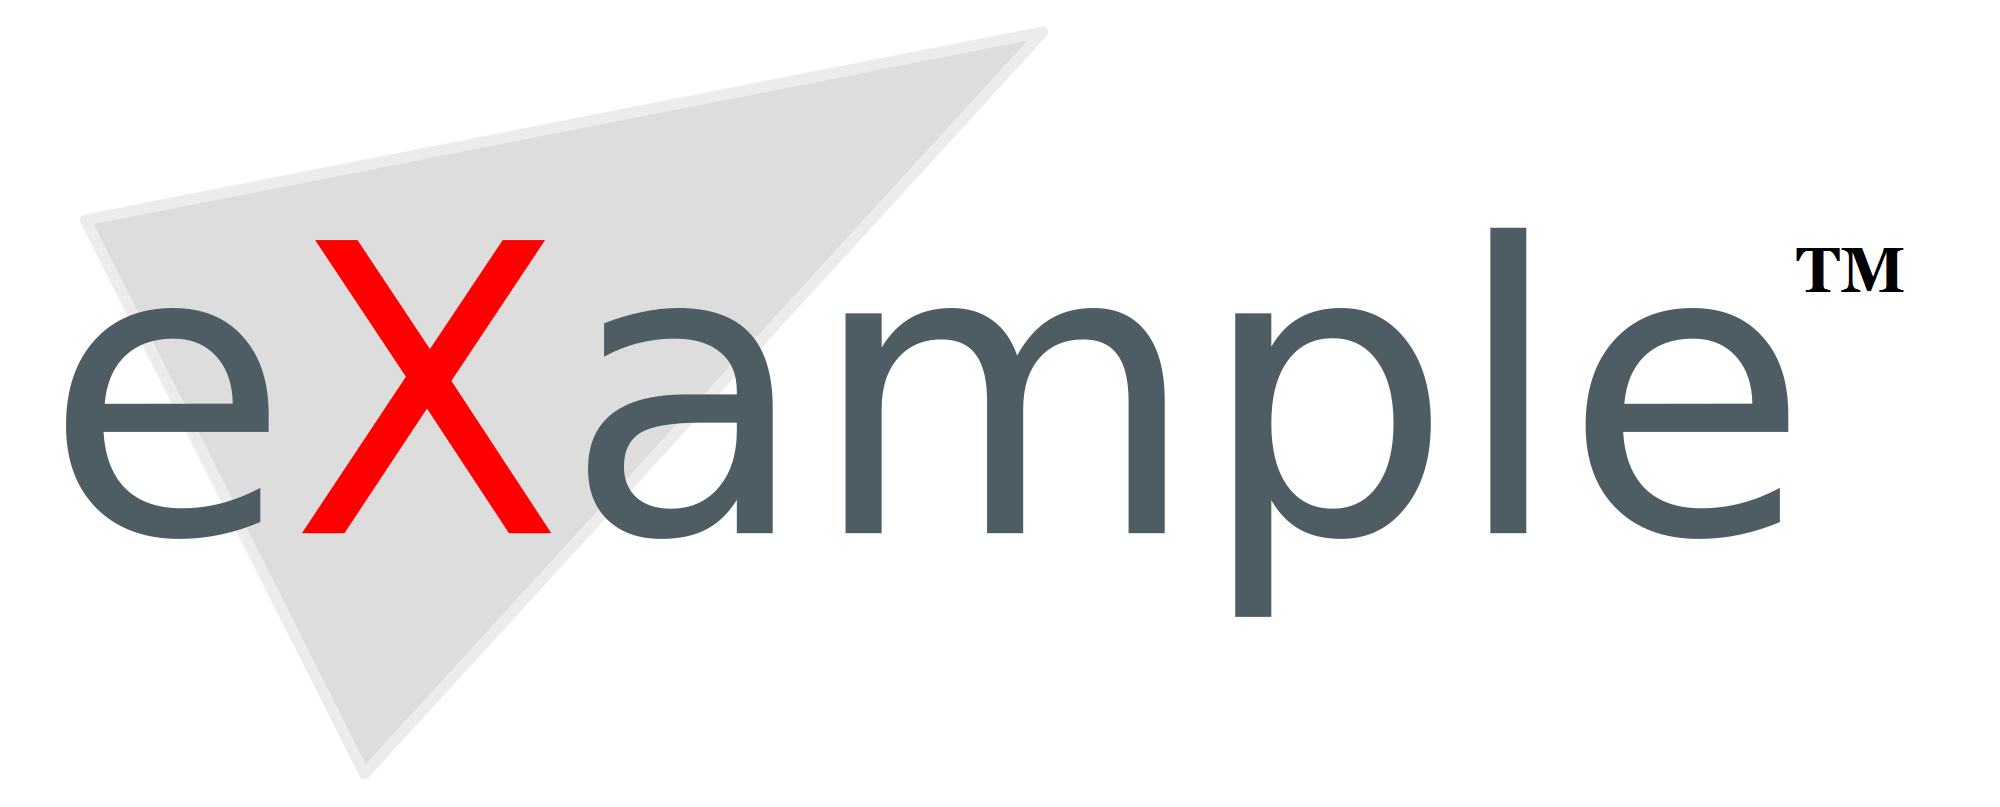 Sample IT Company Logo - Sample company logo png 6 PNG Image